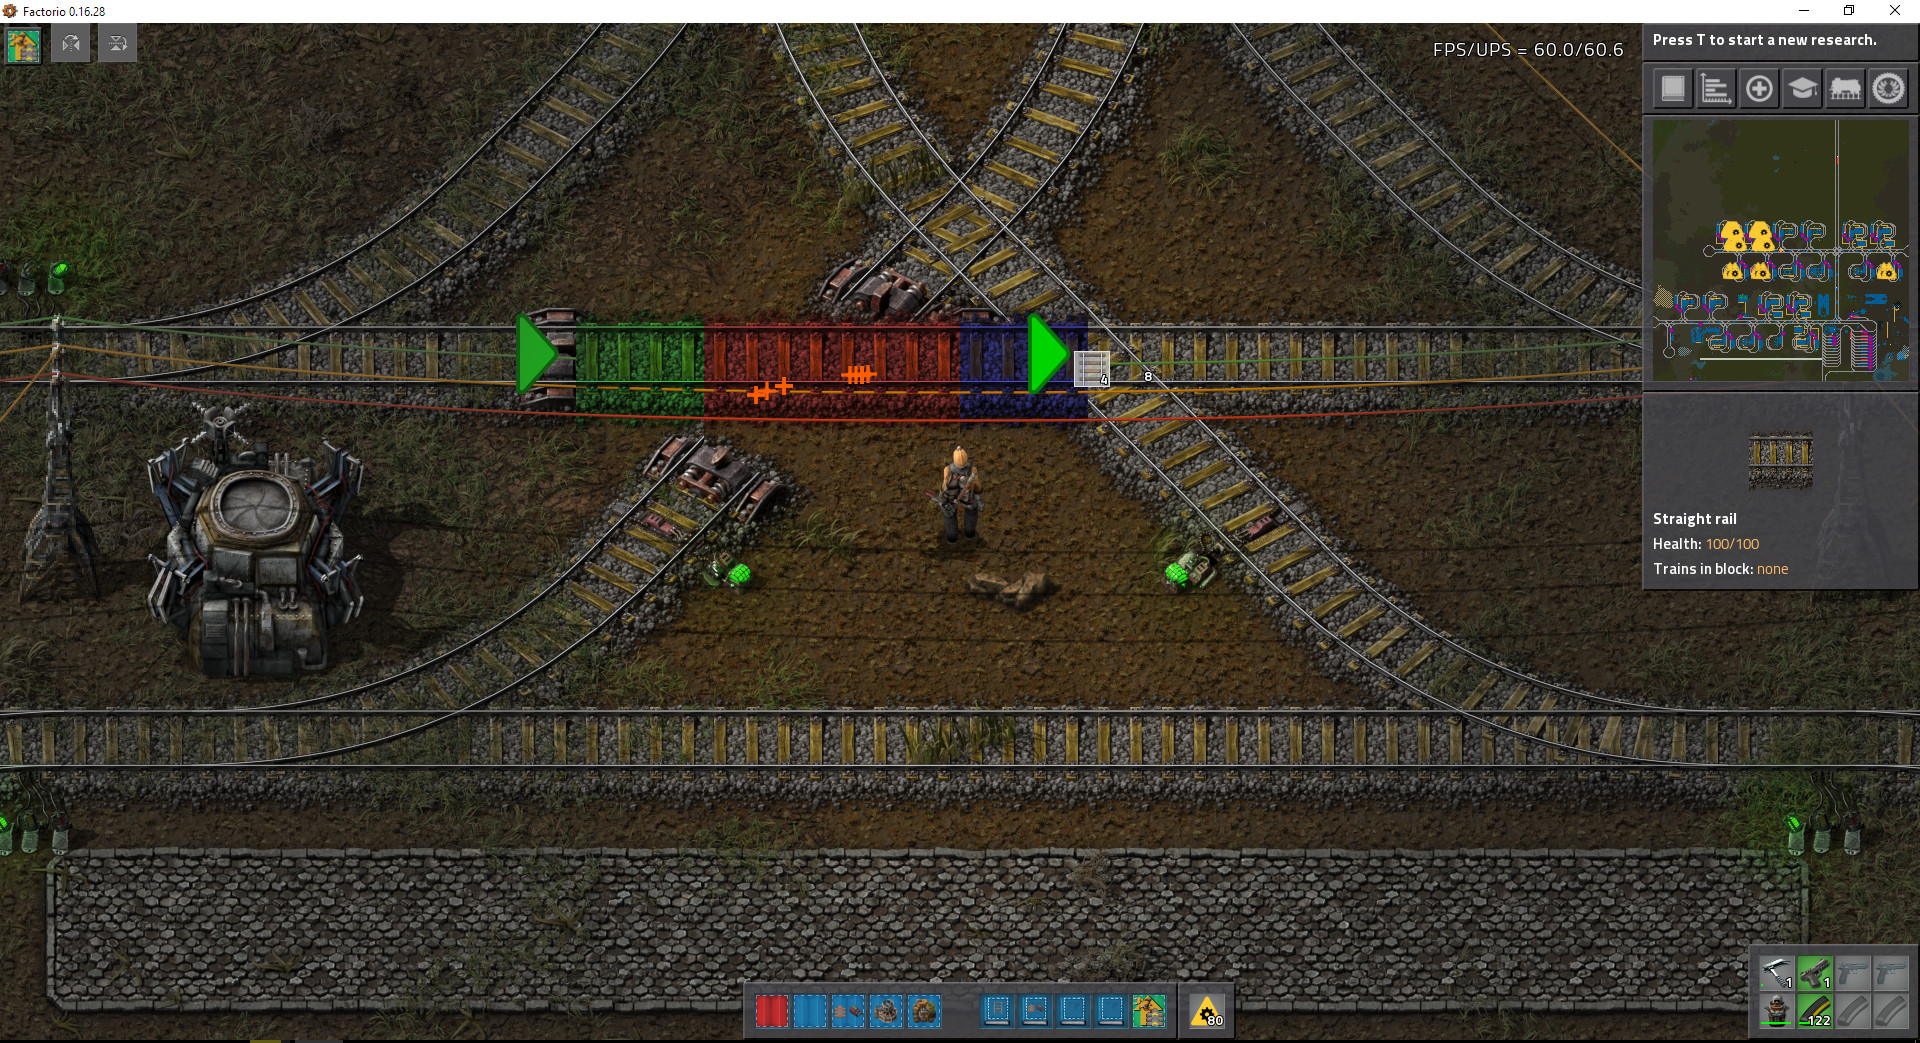 rail segment blocked by red cross-hairs